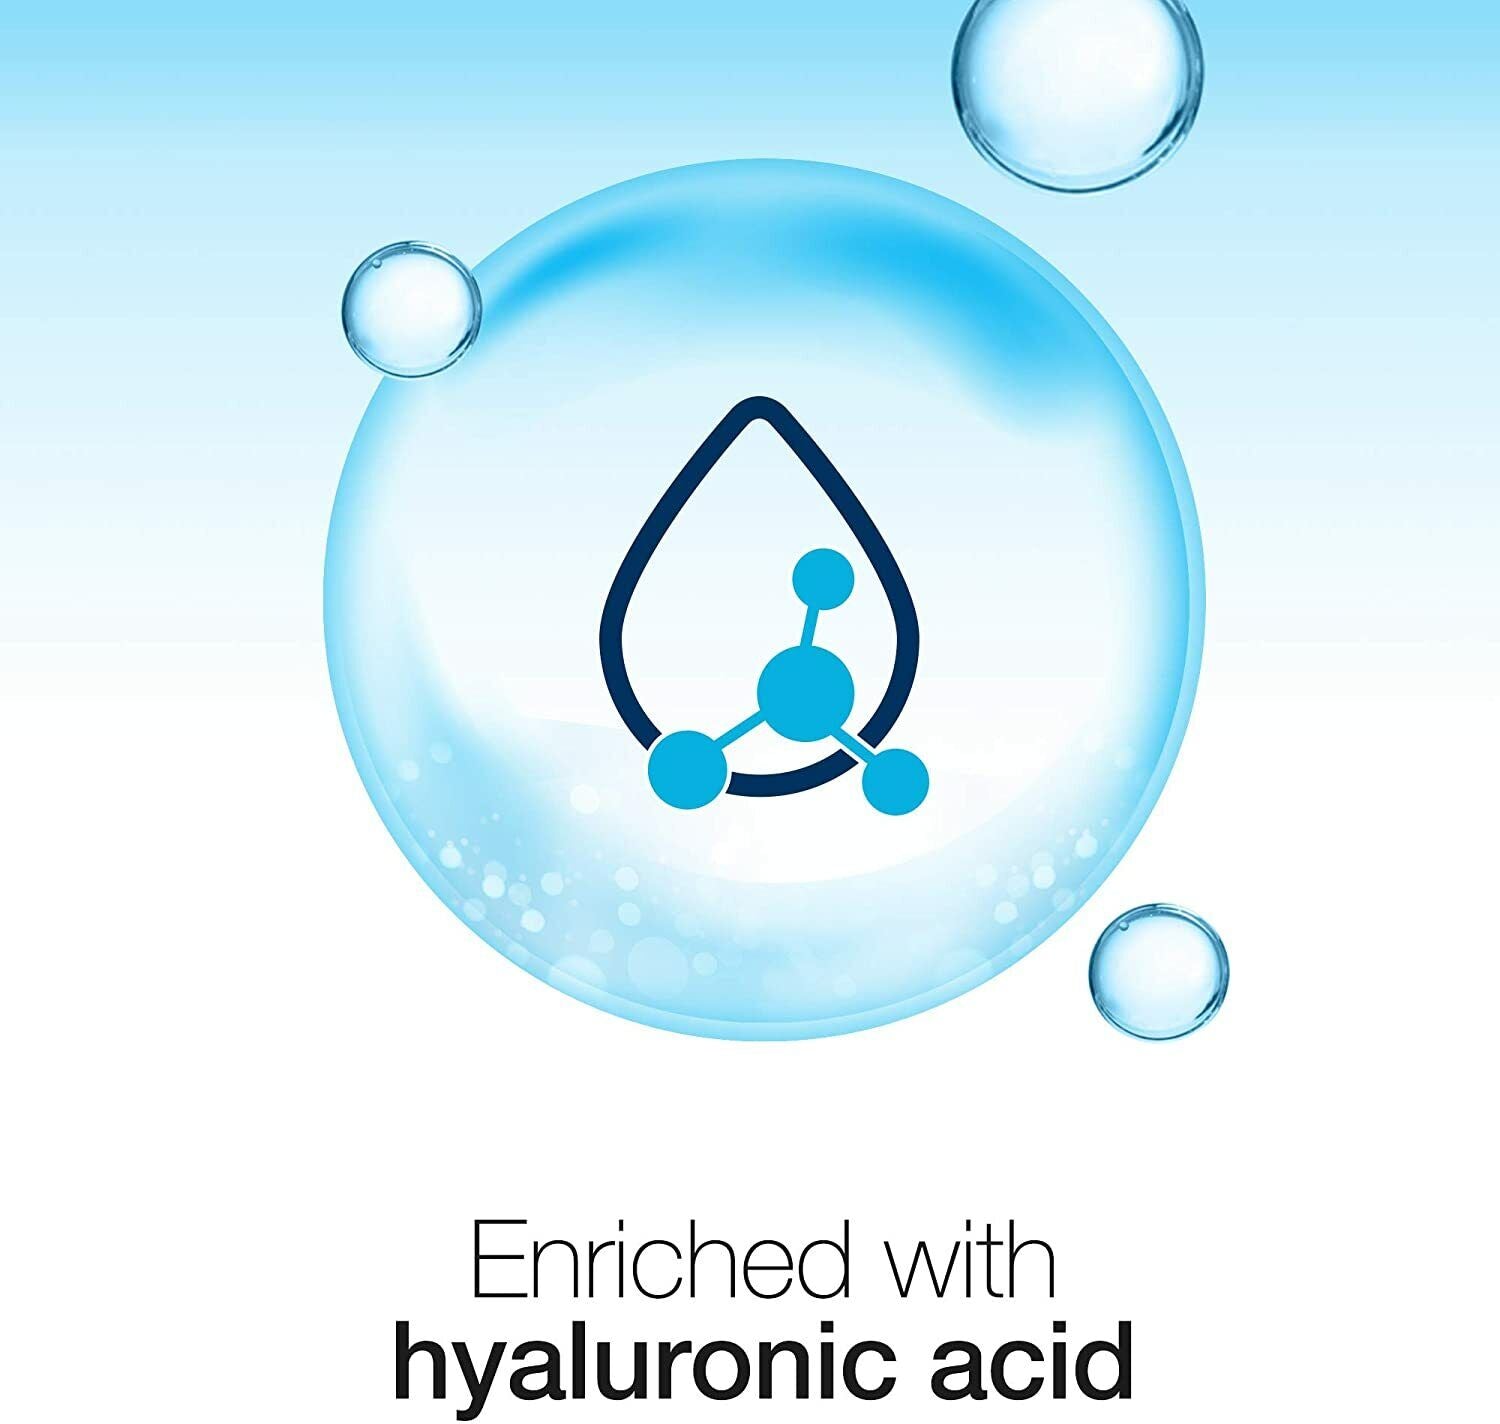 Neutrogena Body Gel Cream hydro boost for normal to dry skin (400ml) Neutrogena